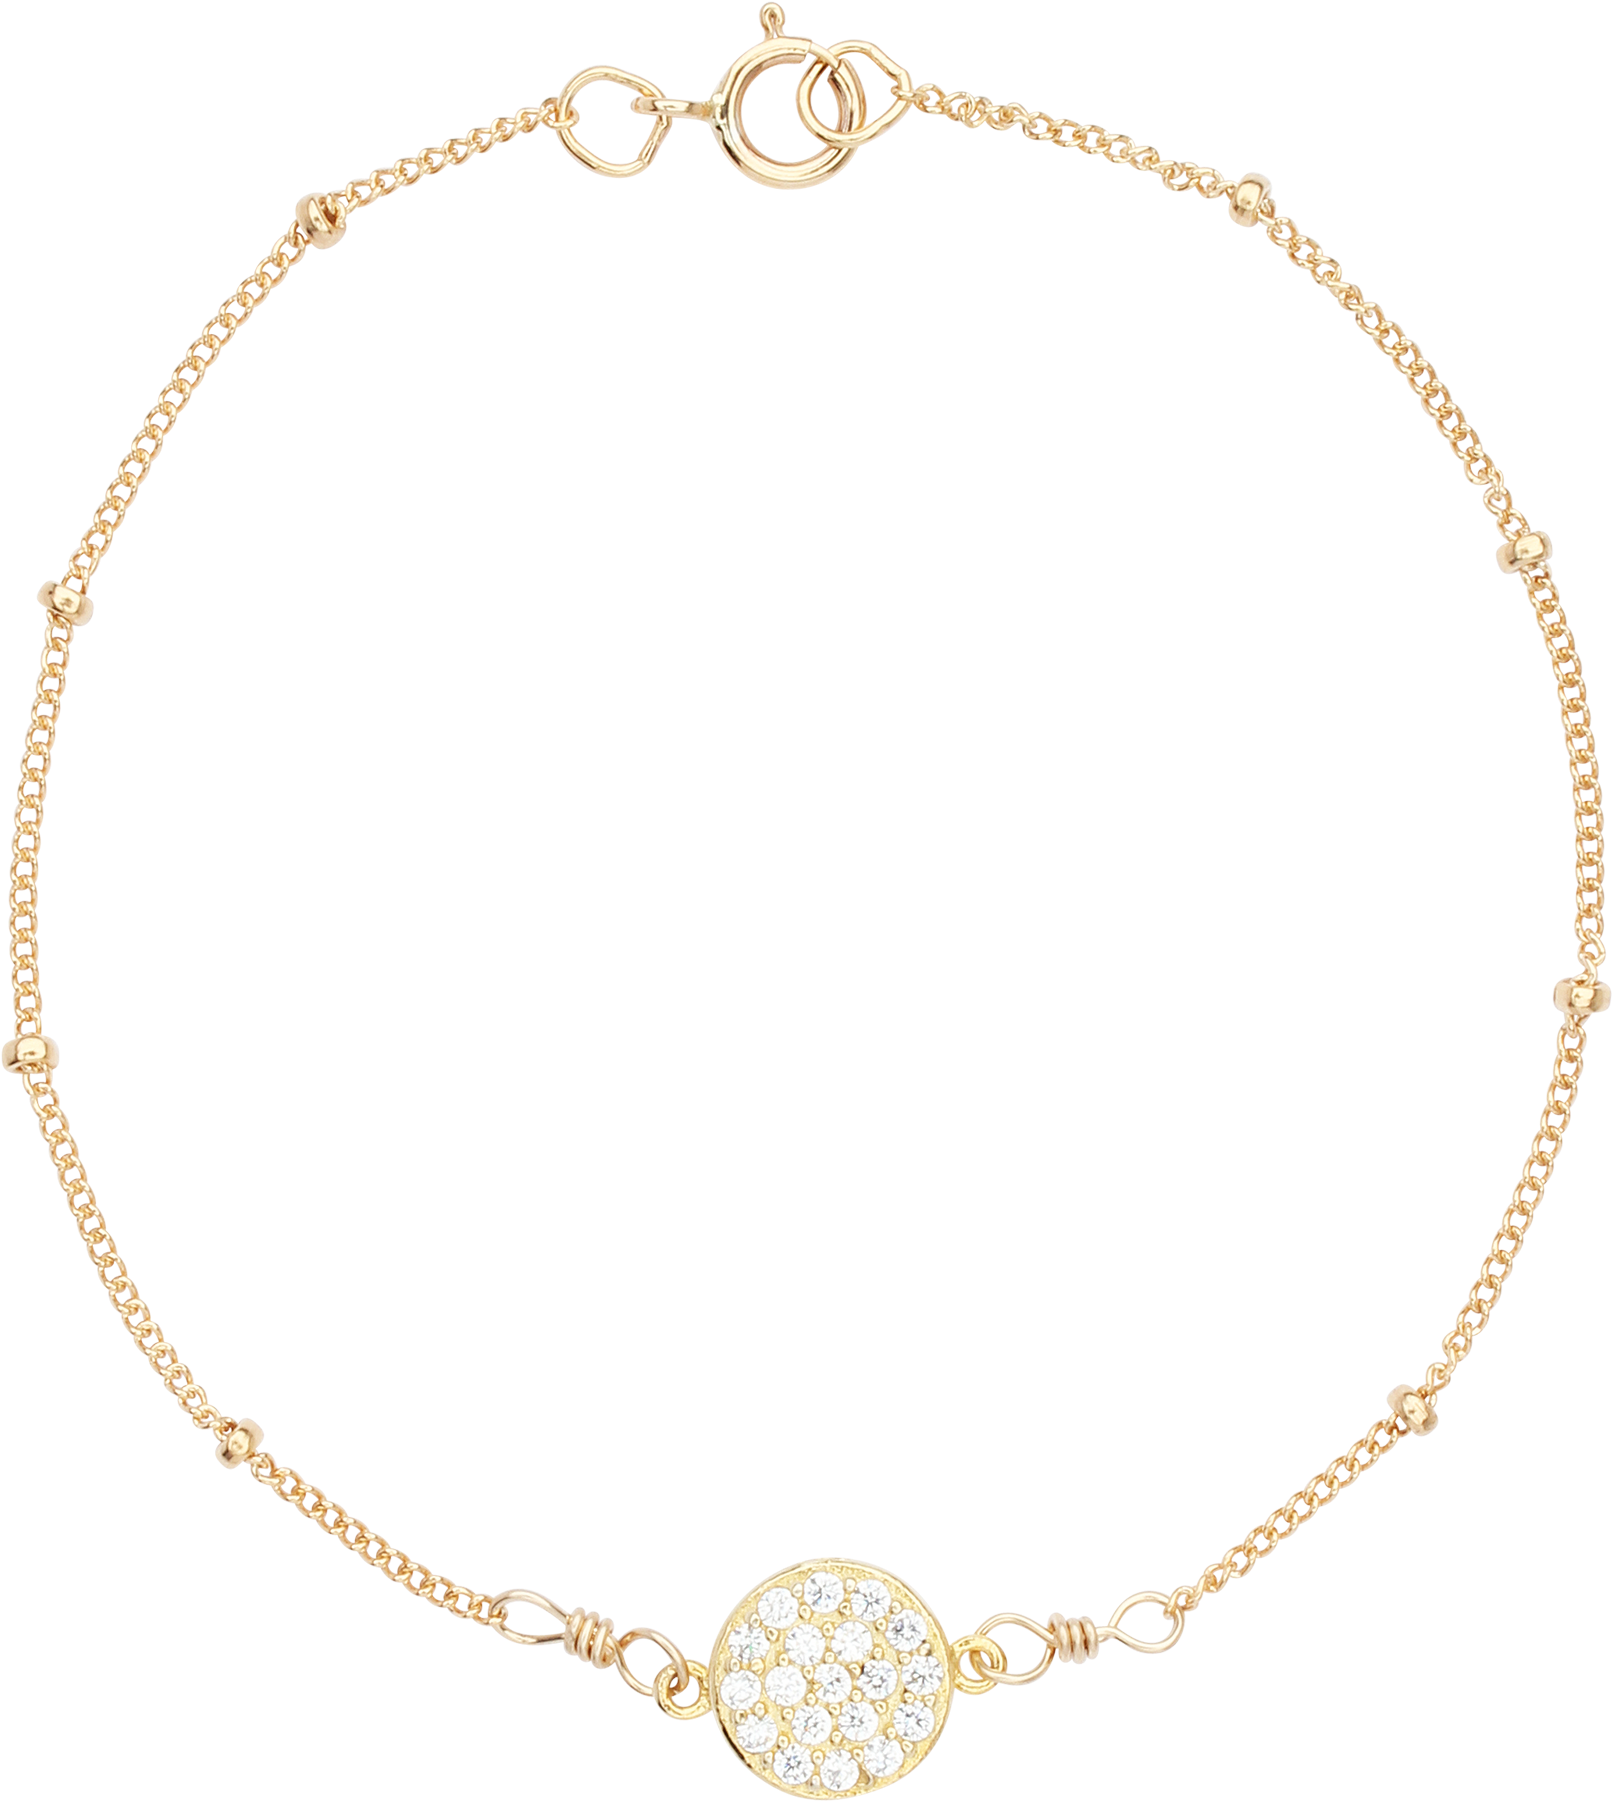 Multi-cz Round Ball Chain Bracelet - Rose Des Vents Necklace Price (2000x2000), Png Download